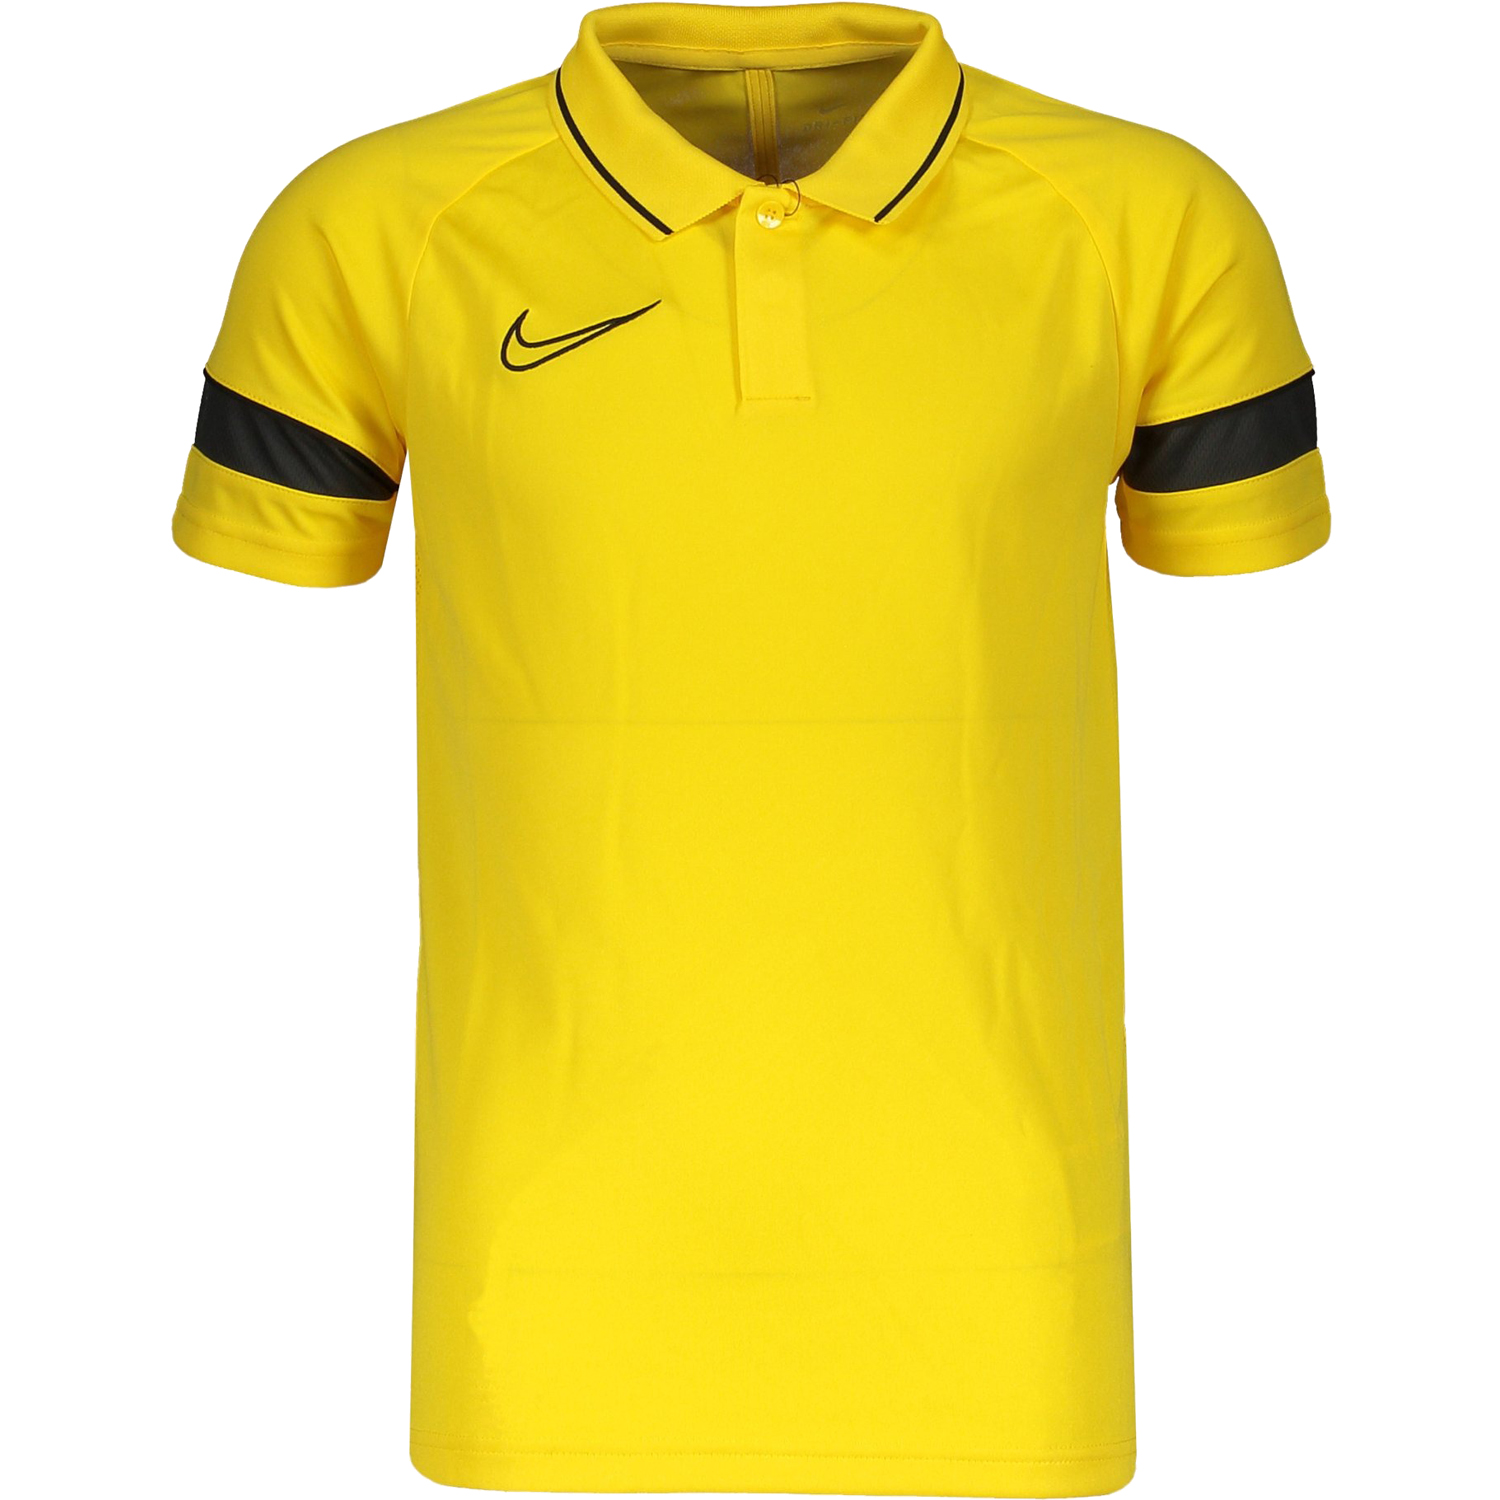 Футболка-поло Nike Performance Fussball Teamsport Academy 21, желтый/черный/серый